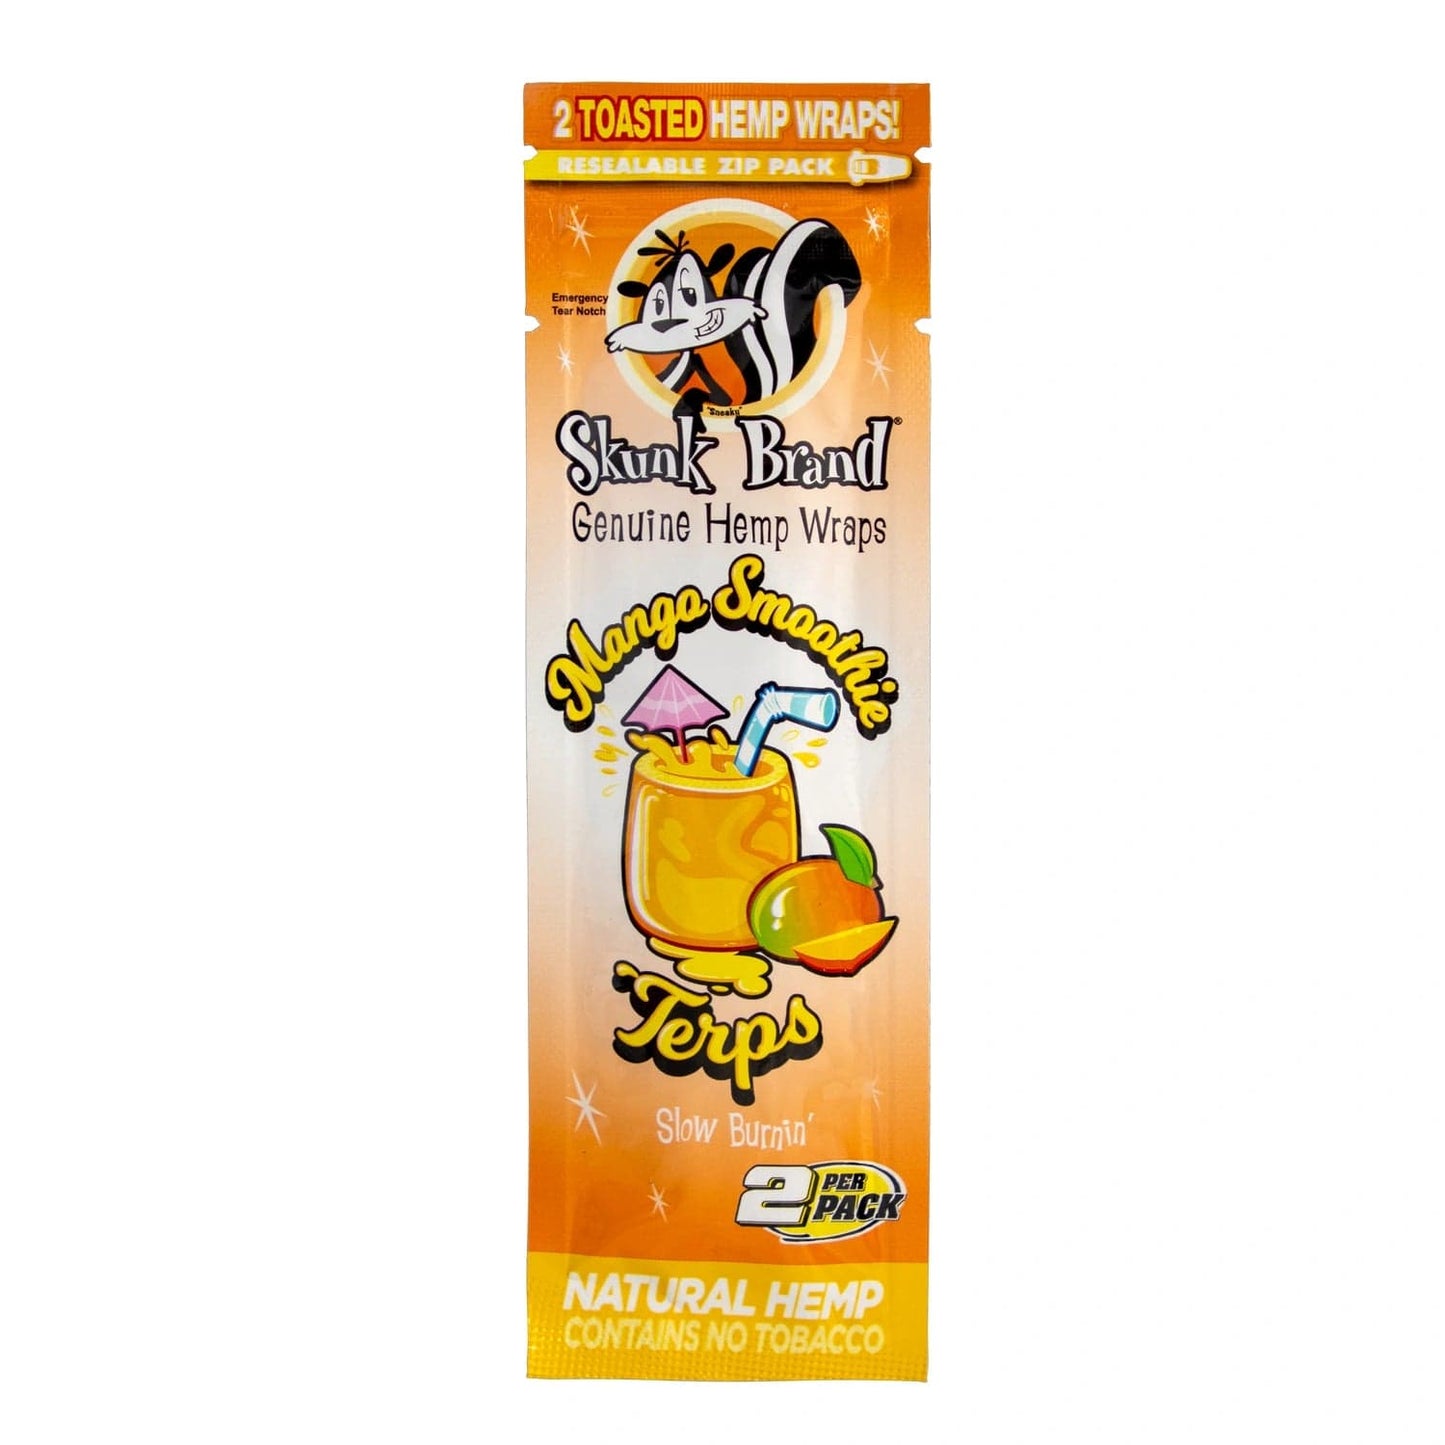 Skunk Brand Mango Smoothie Hemp Wraps